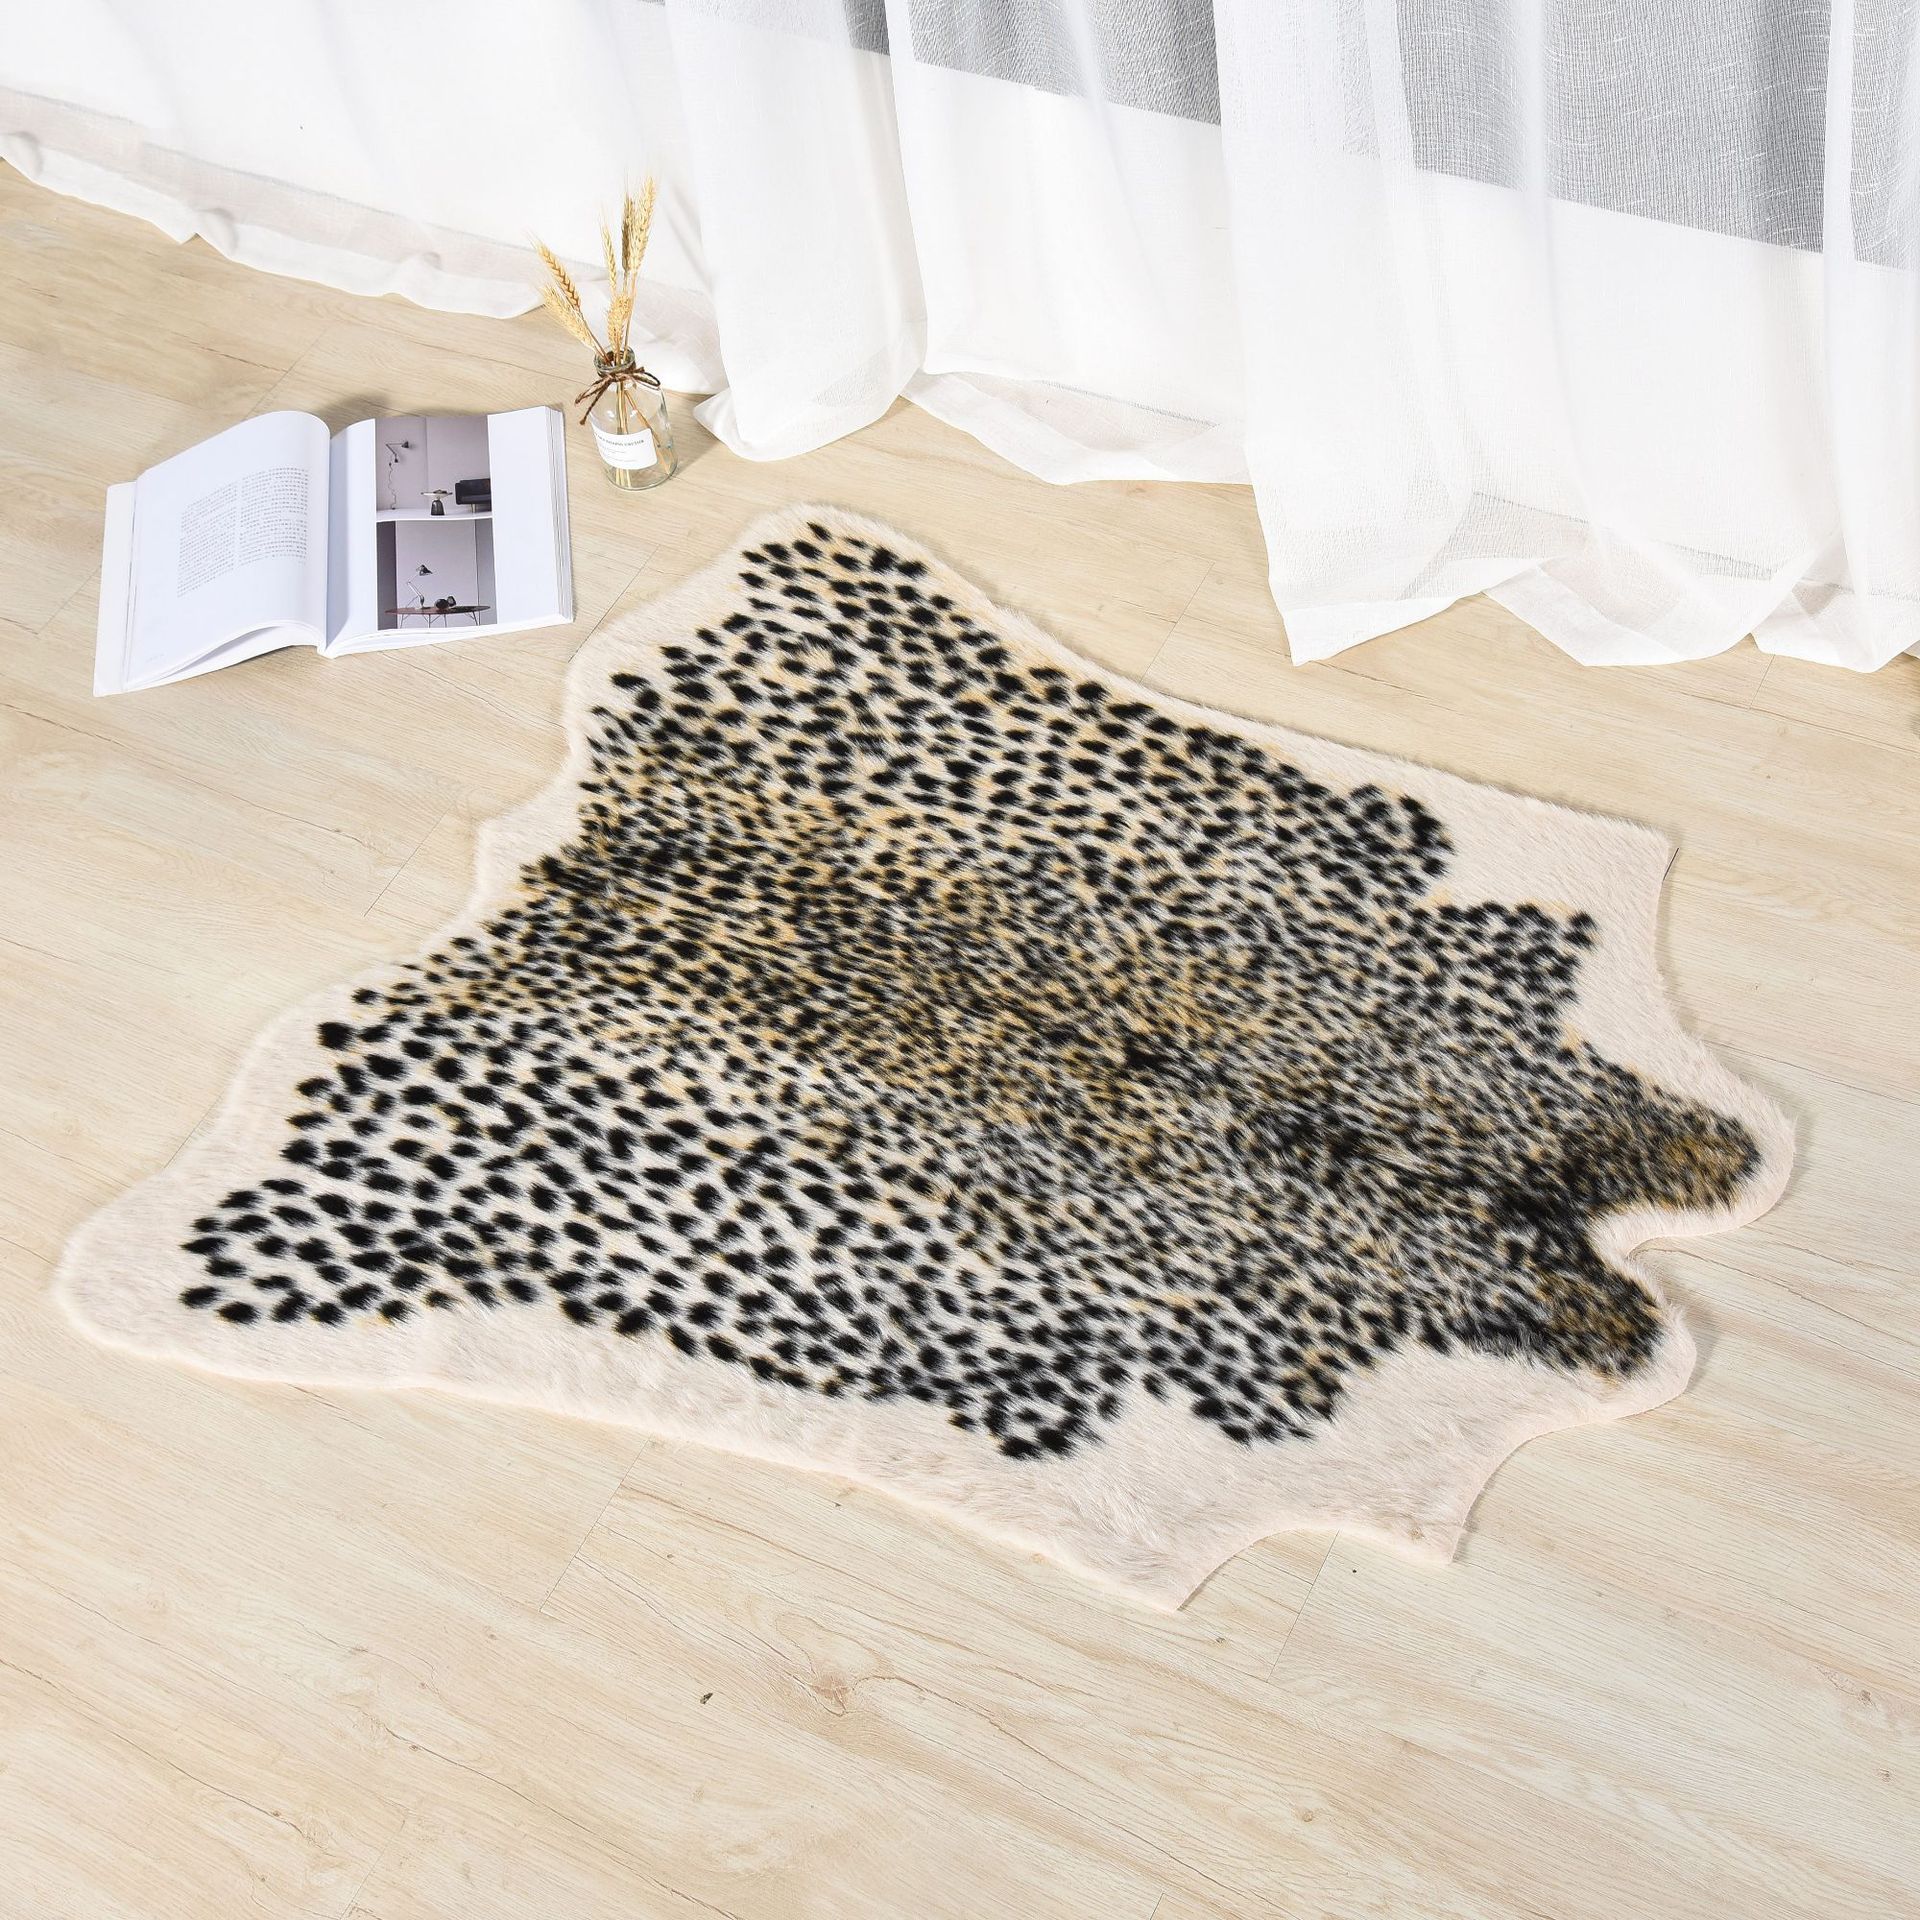 Bubble Kiss 2020 Fashion Fluffy Carpet Imitation Fur Carpets for Living Room Home Bedroom Bedside Area Rugs Hot Sale Floor Mats